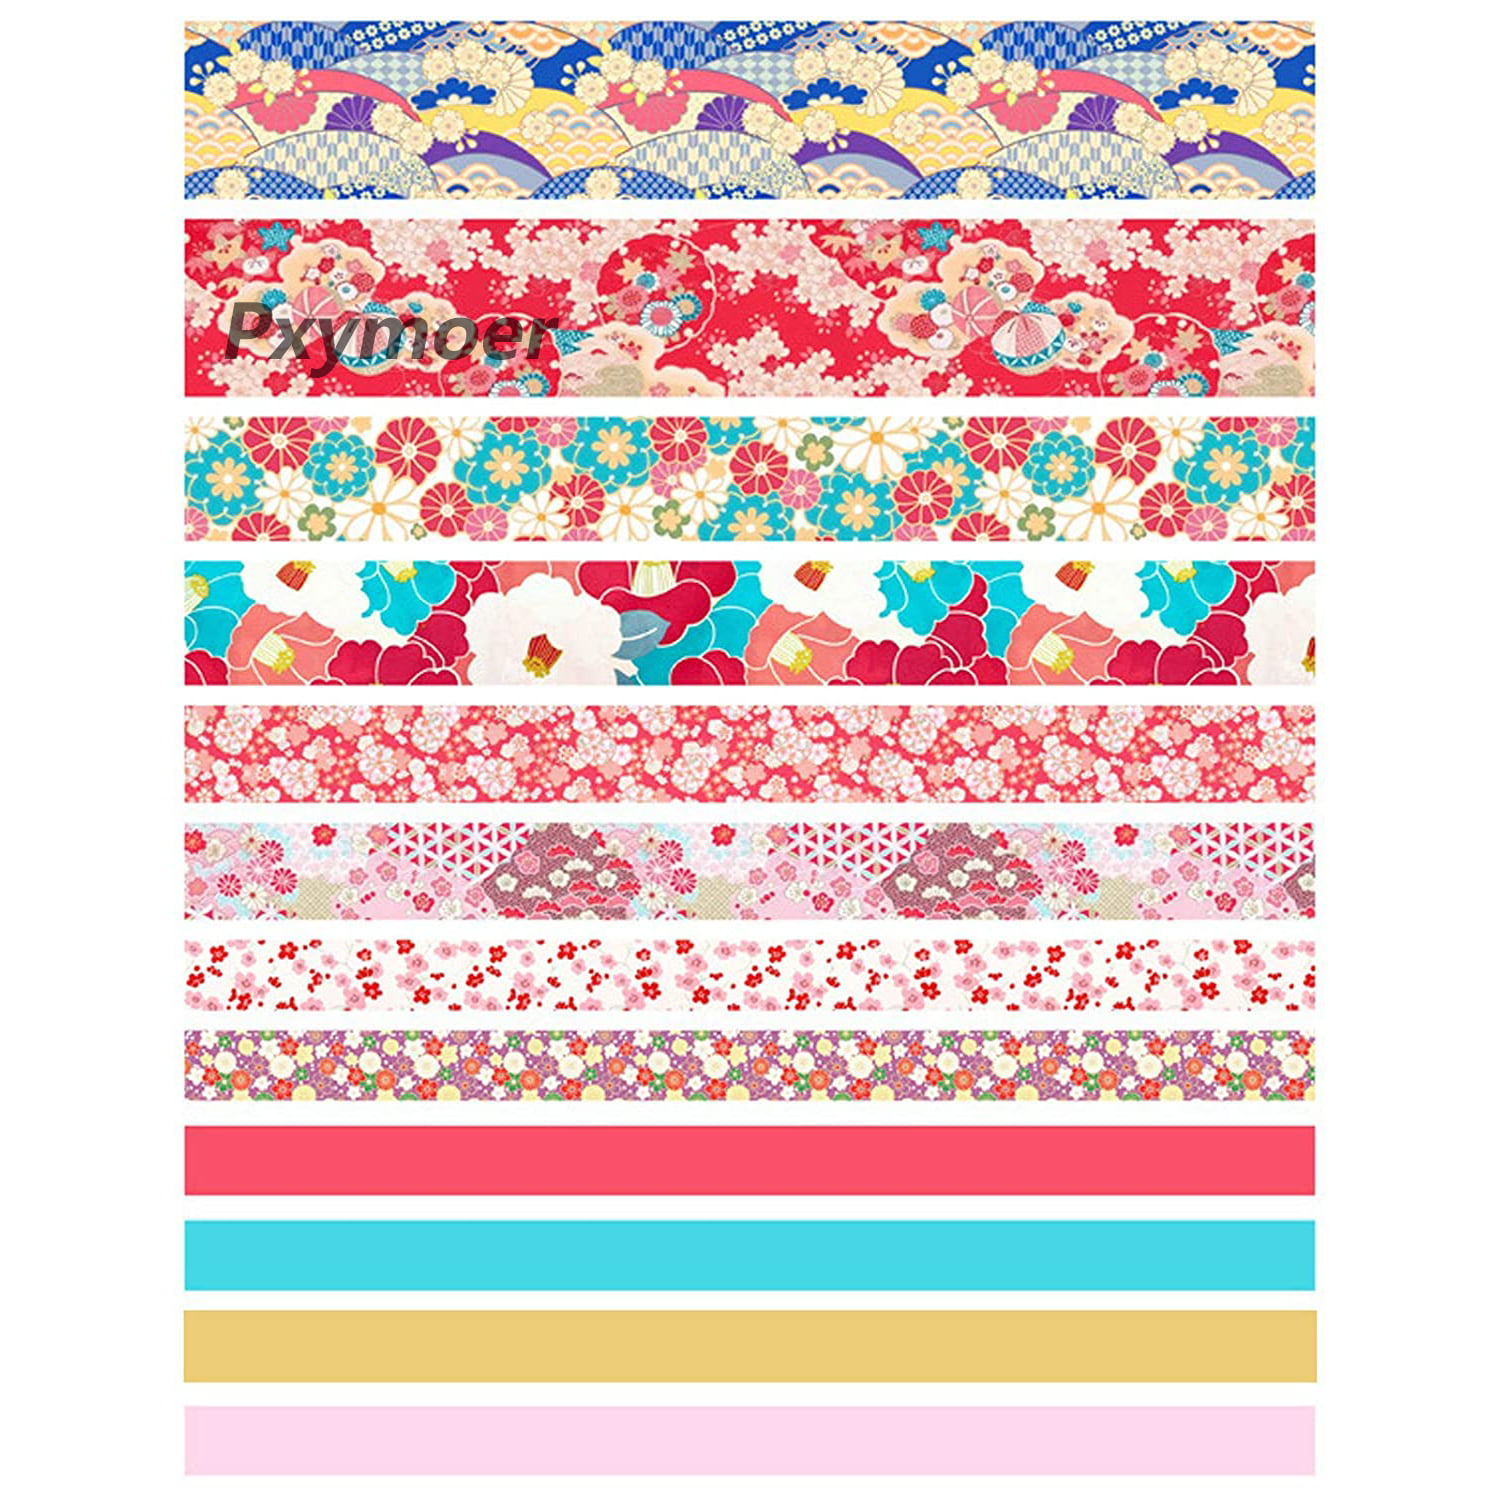 Pxymoer 12 Rolls Washi Tape Set, Cherry Blossoms Floral Pattern Decorative Washi Masking Tape for Scrapbook, DIY, Crafts, Bullet Journal, DIY, Gift